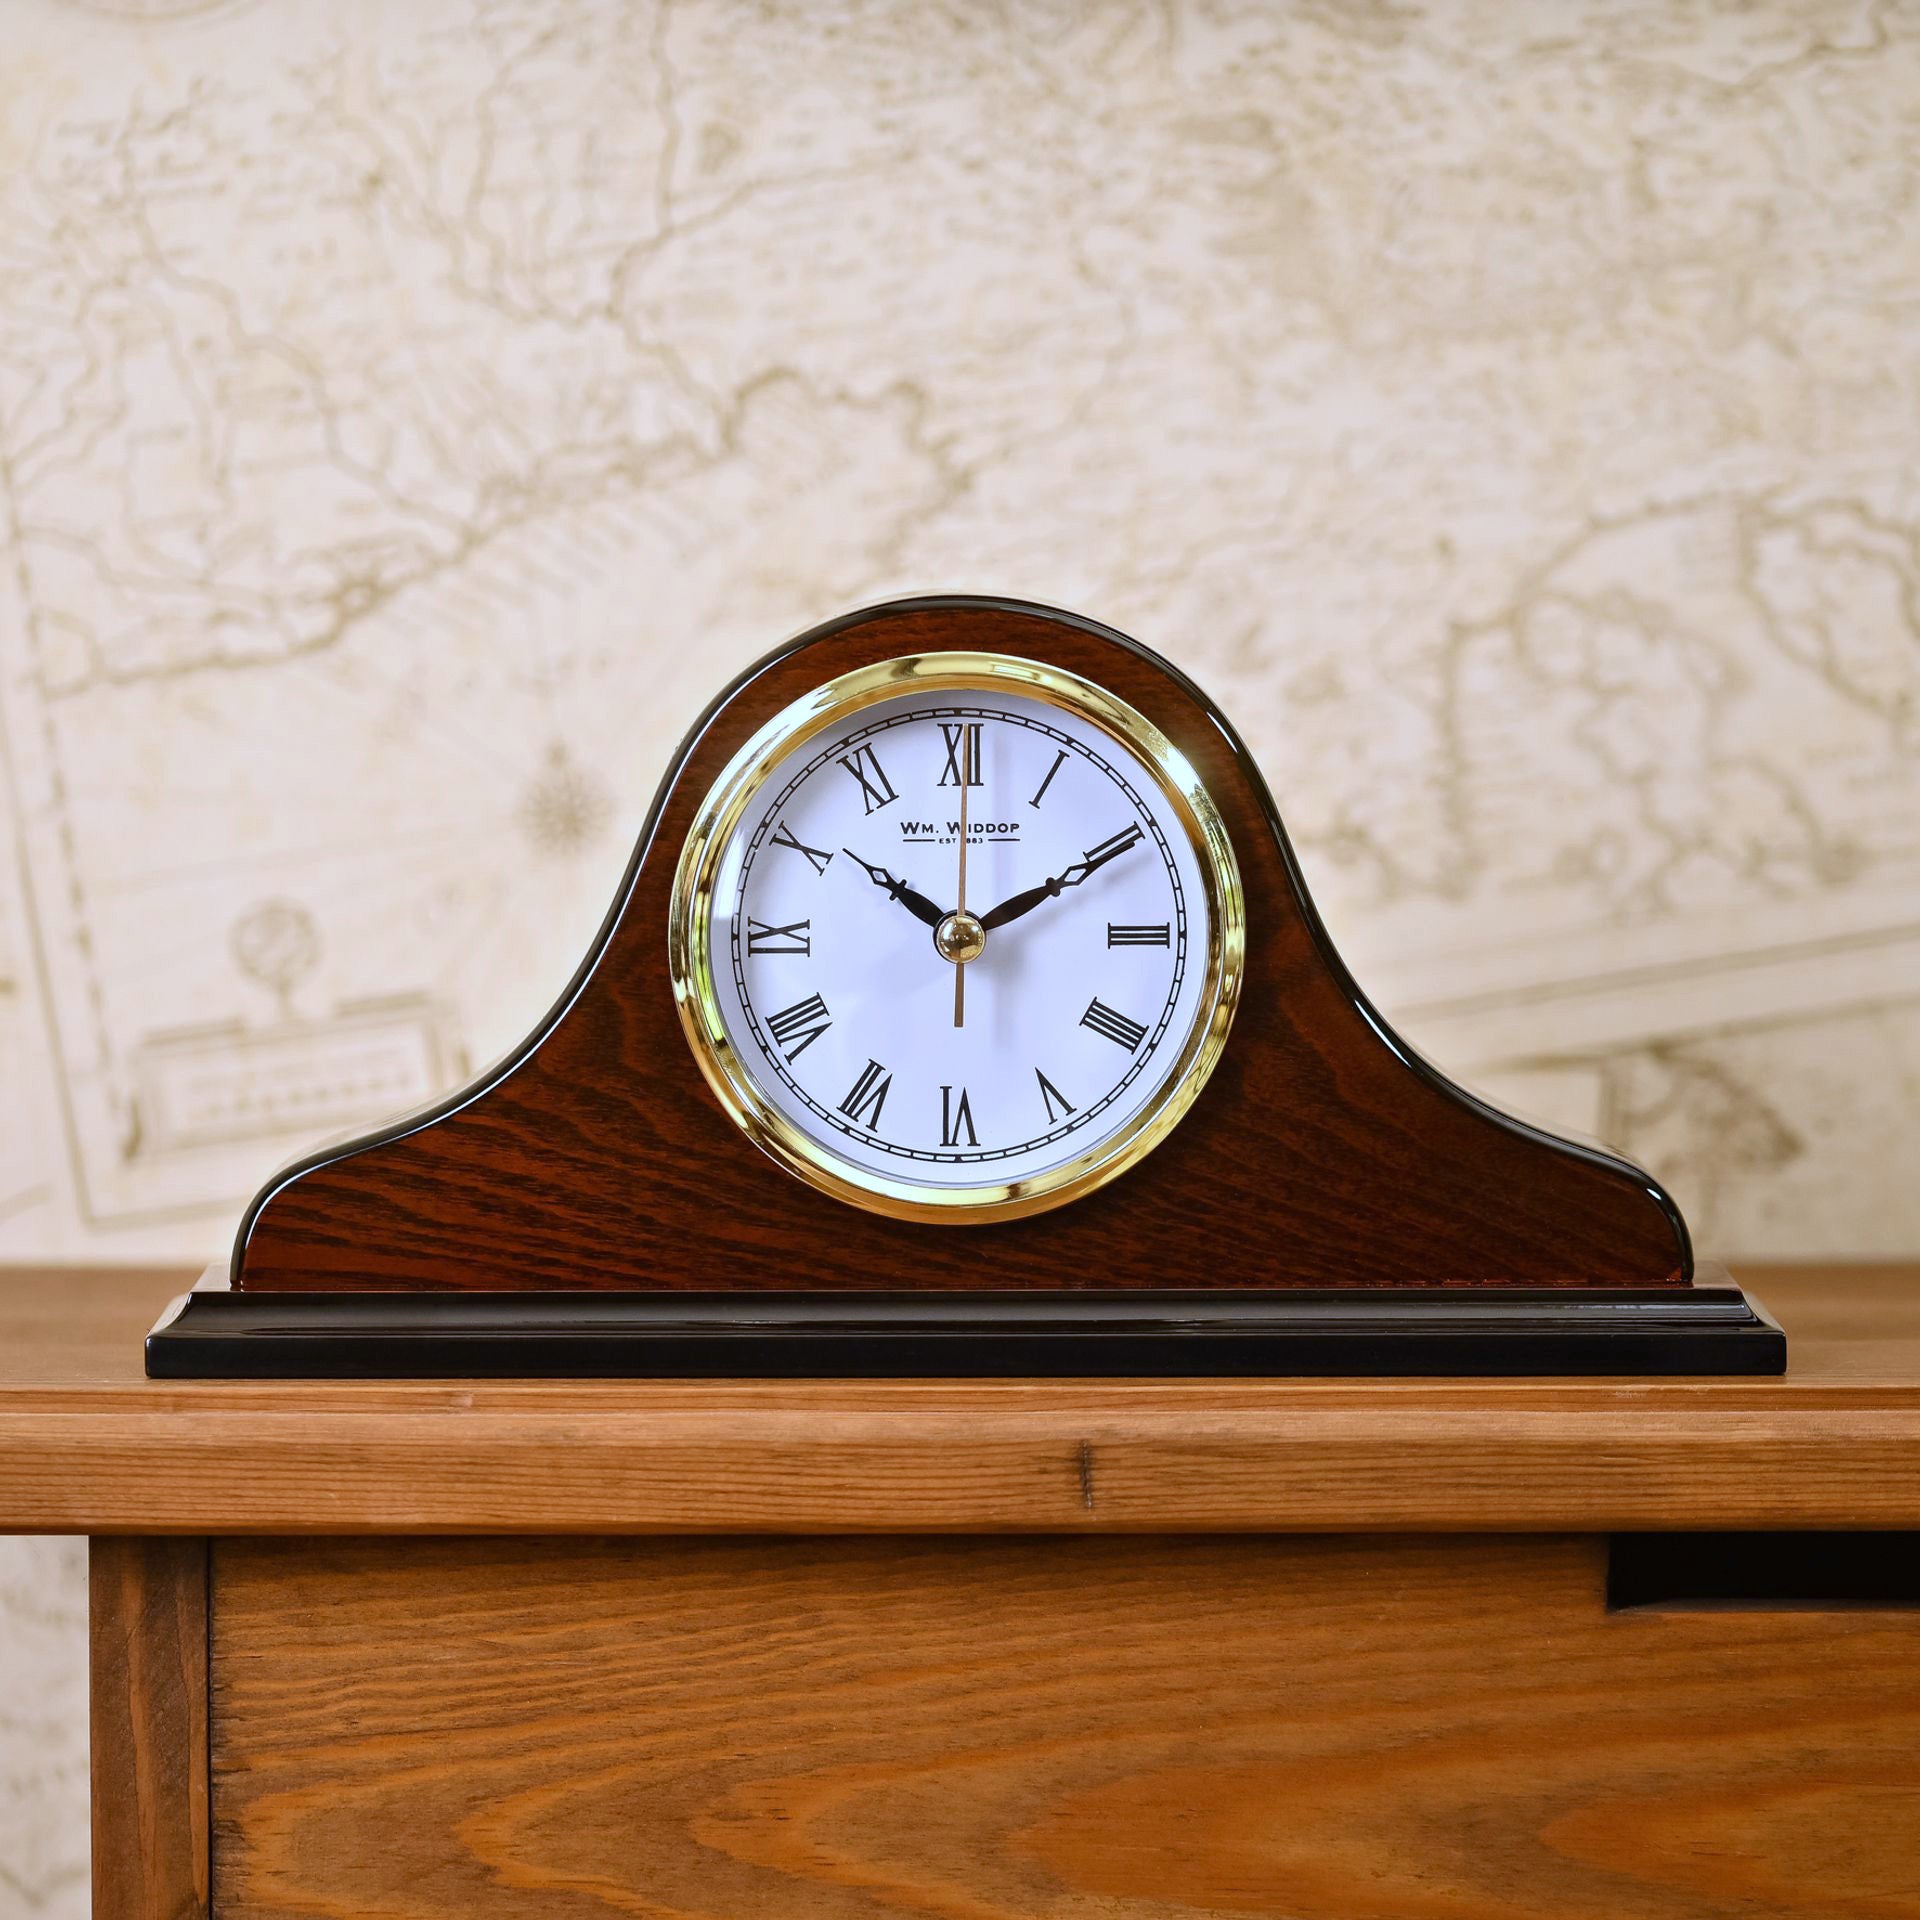 WM. Widdop Polished Wooden Napoleon Shaped Mantel Clock